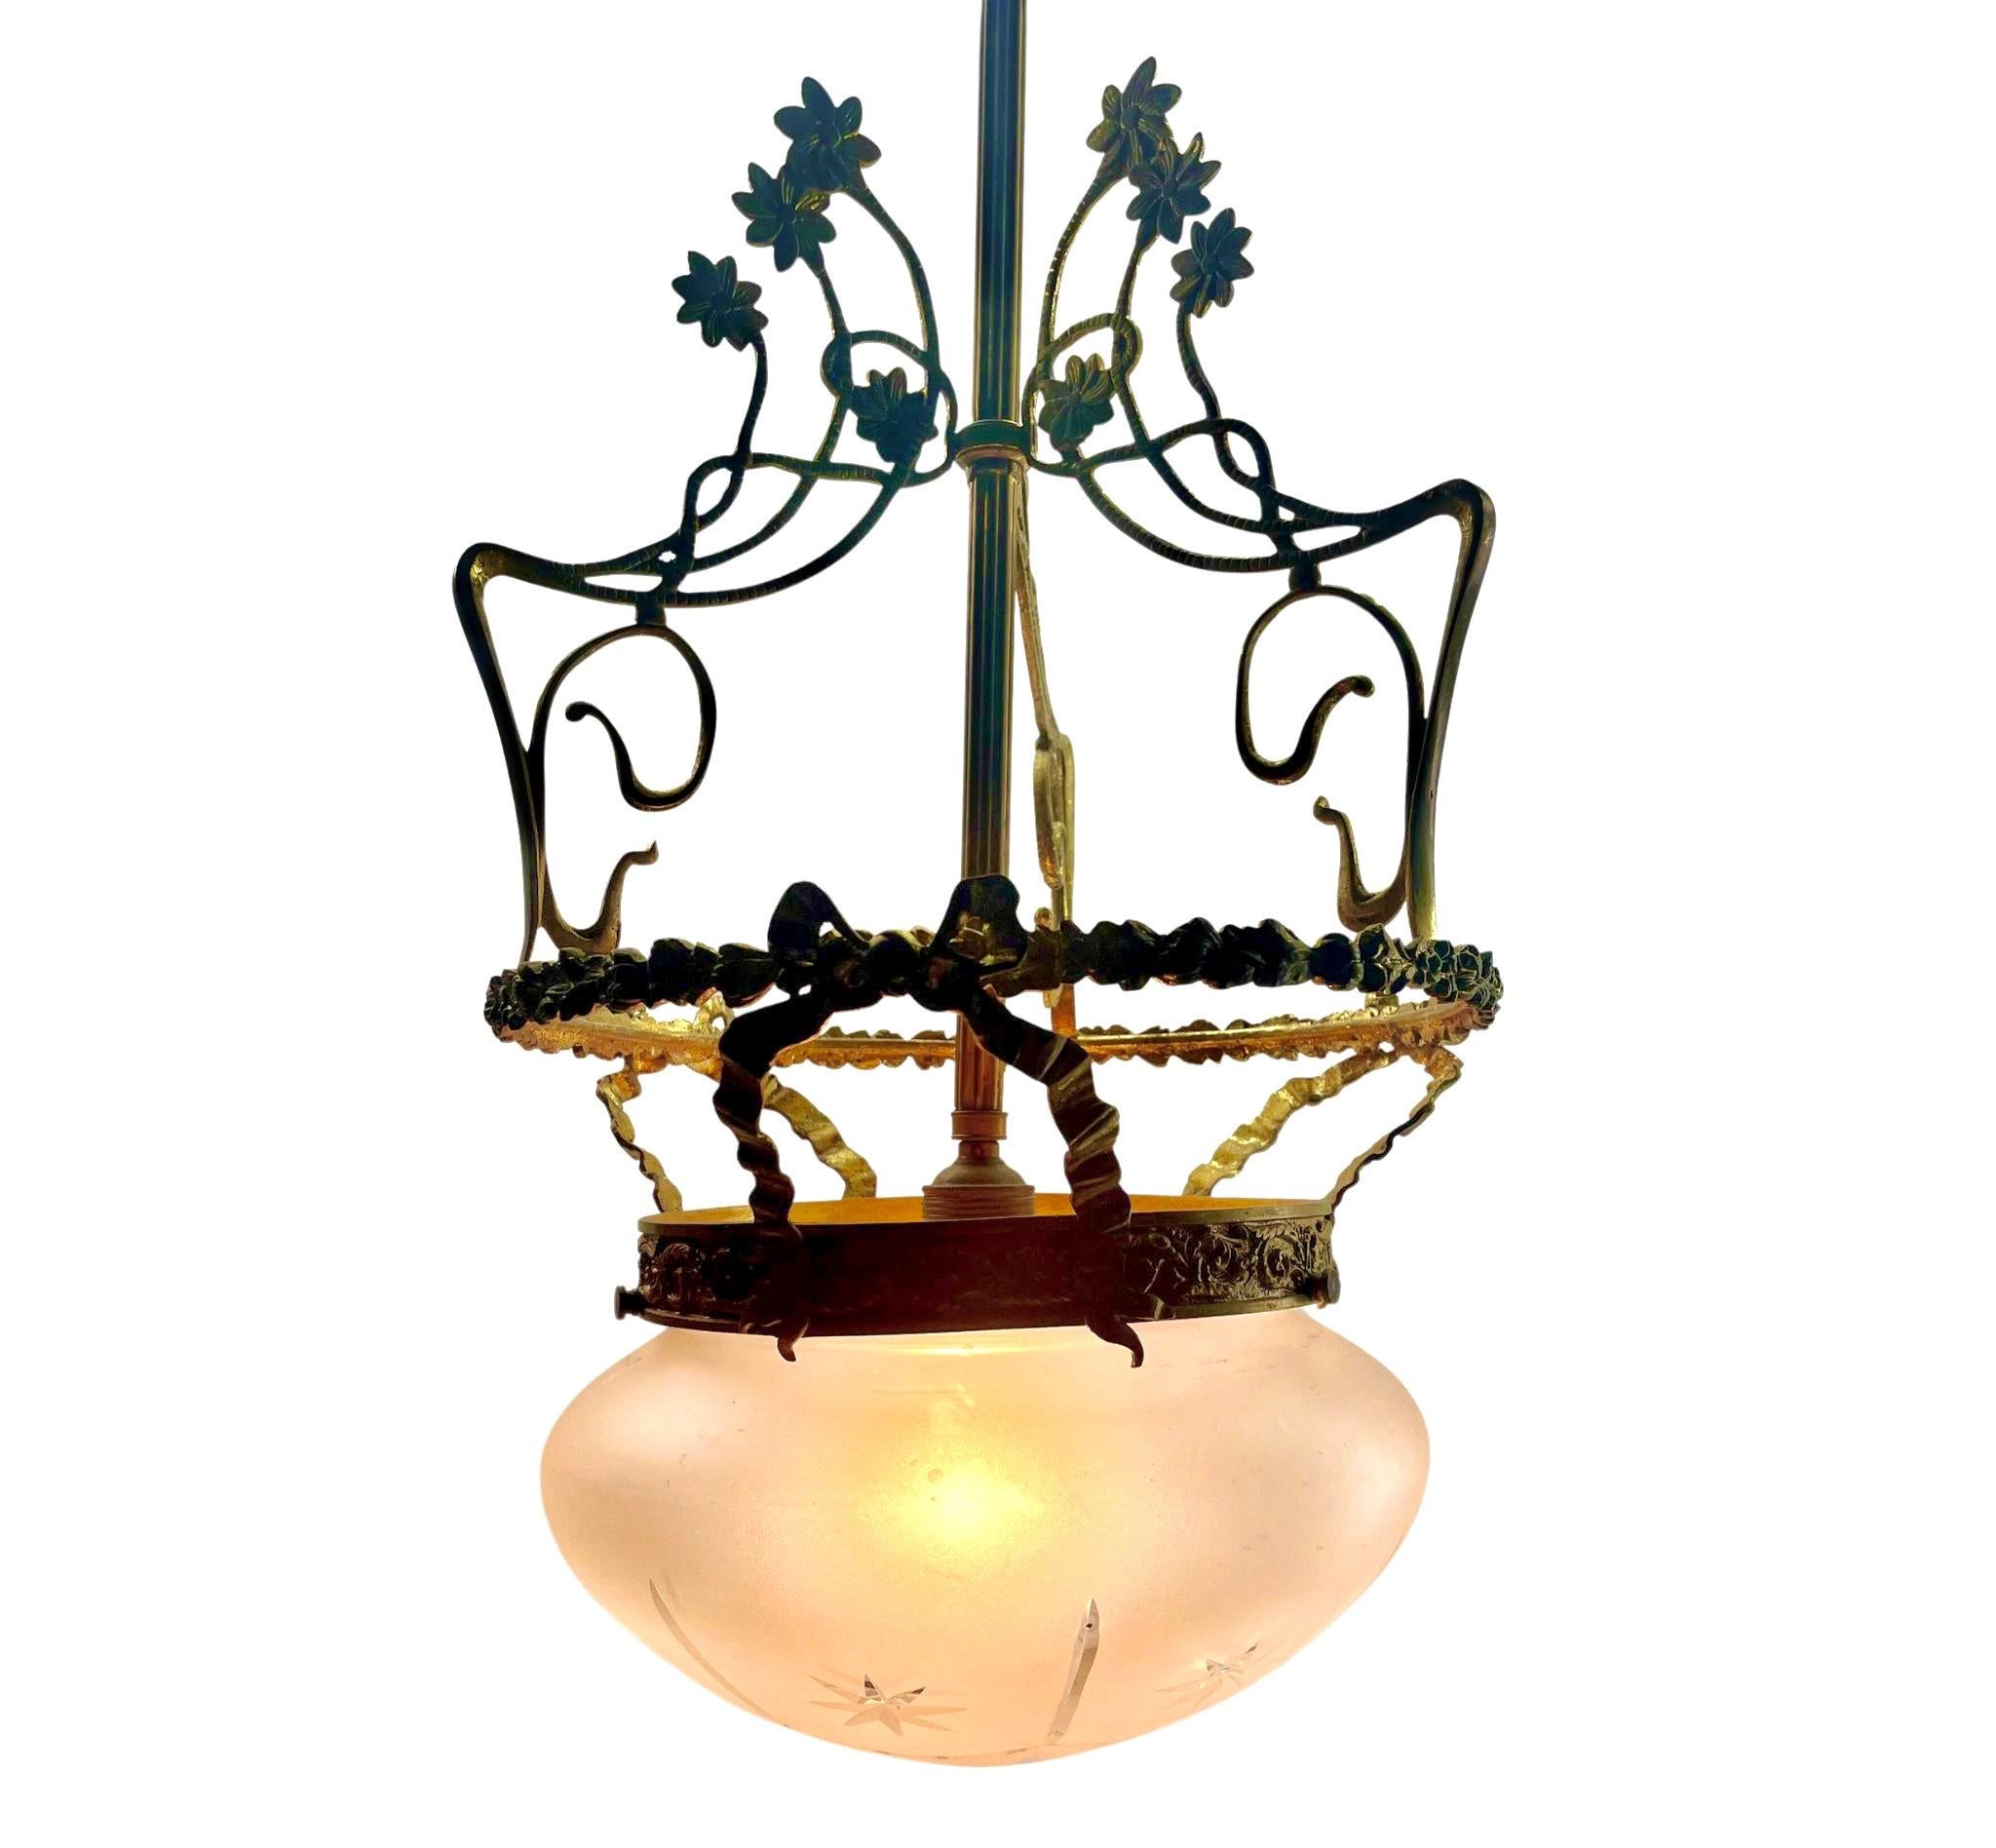 Art Nouveau Solid Brass Chandelier With Floral Decorations  1930s For Sale 2